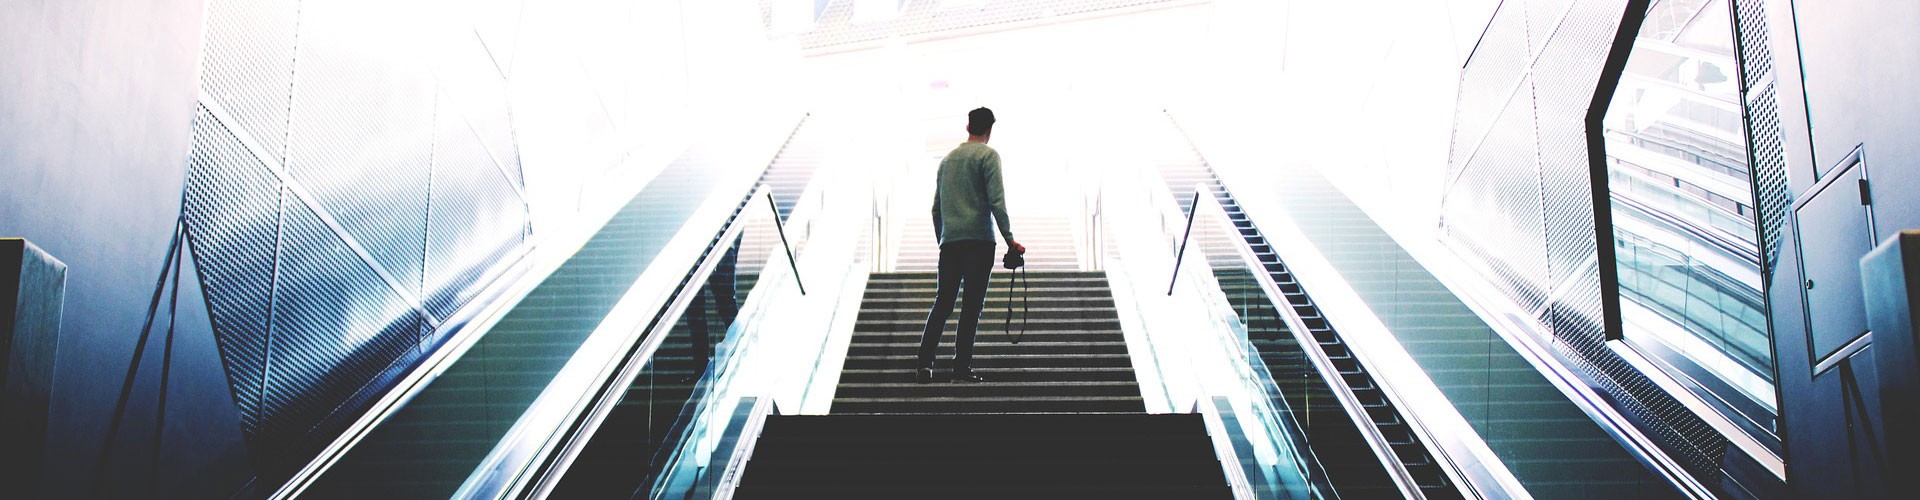 man ascending escalator